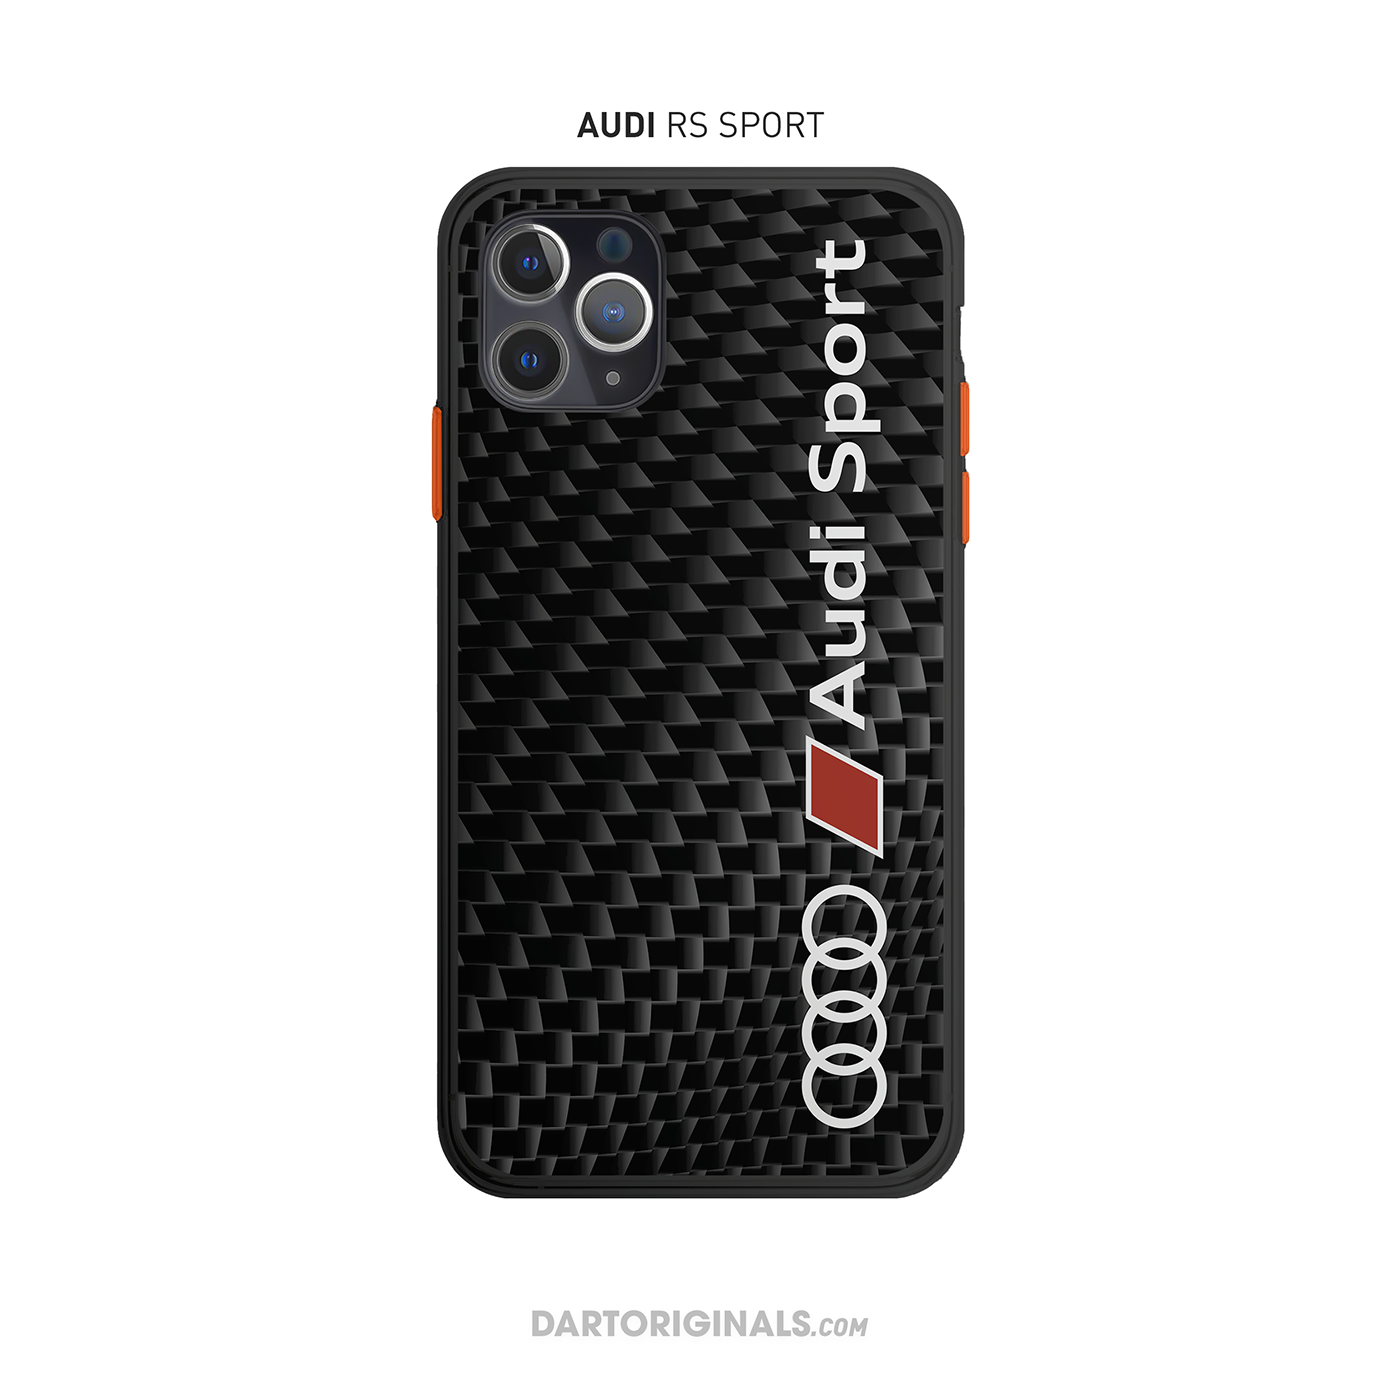 Team Audi - RS Carbon Edition